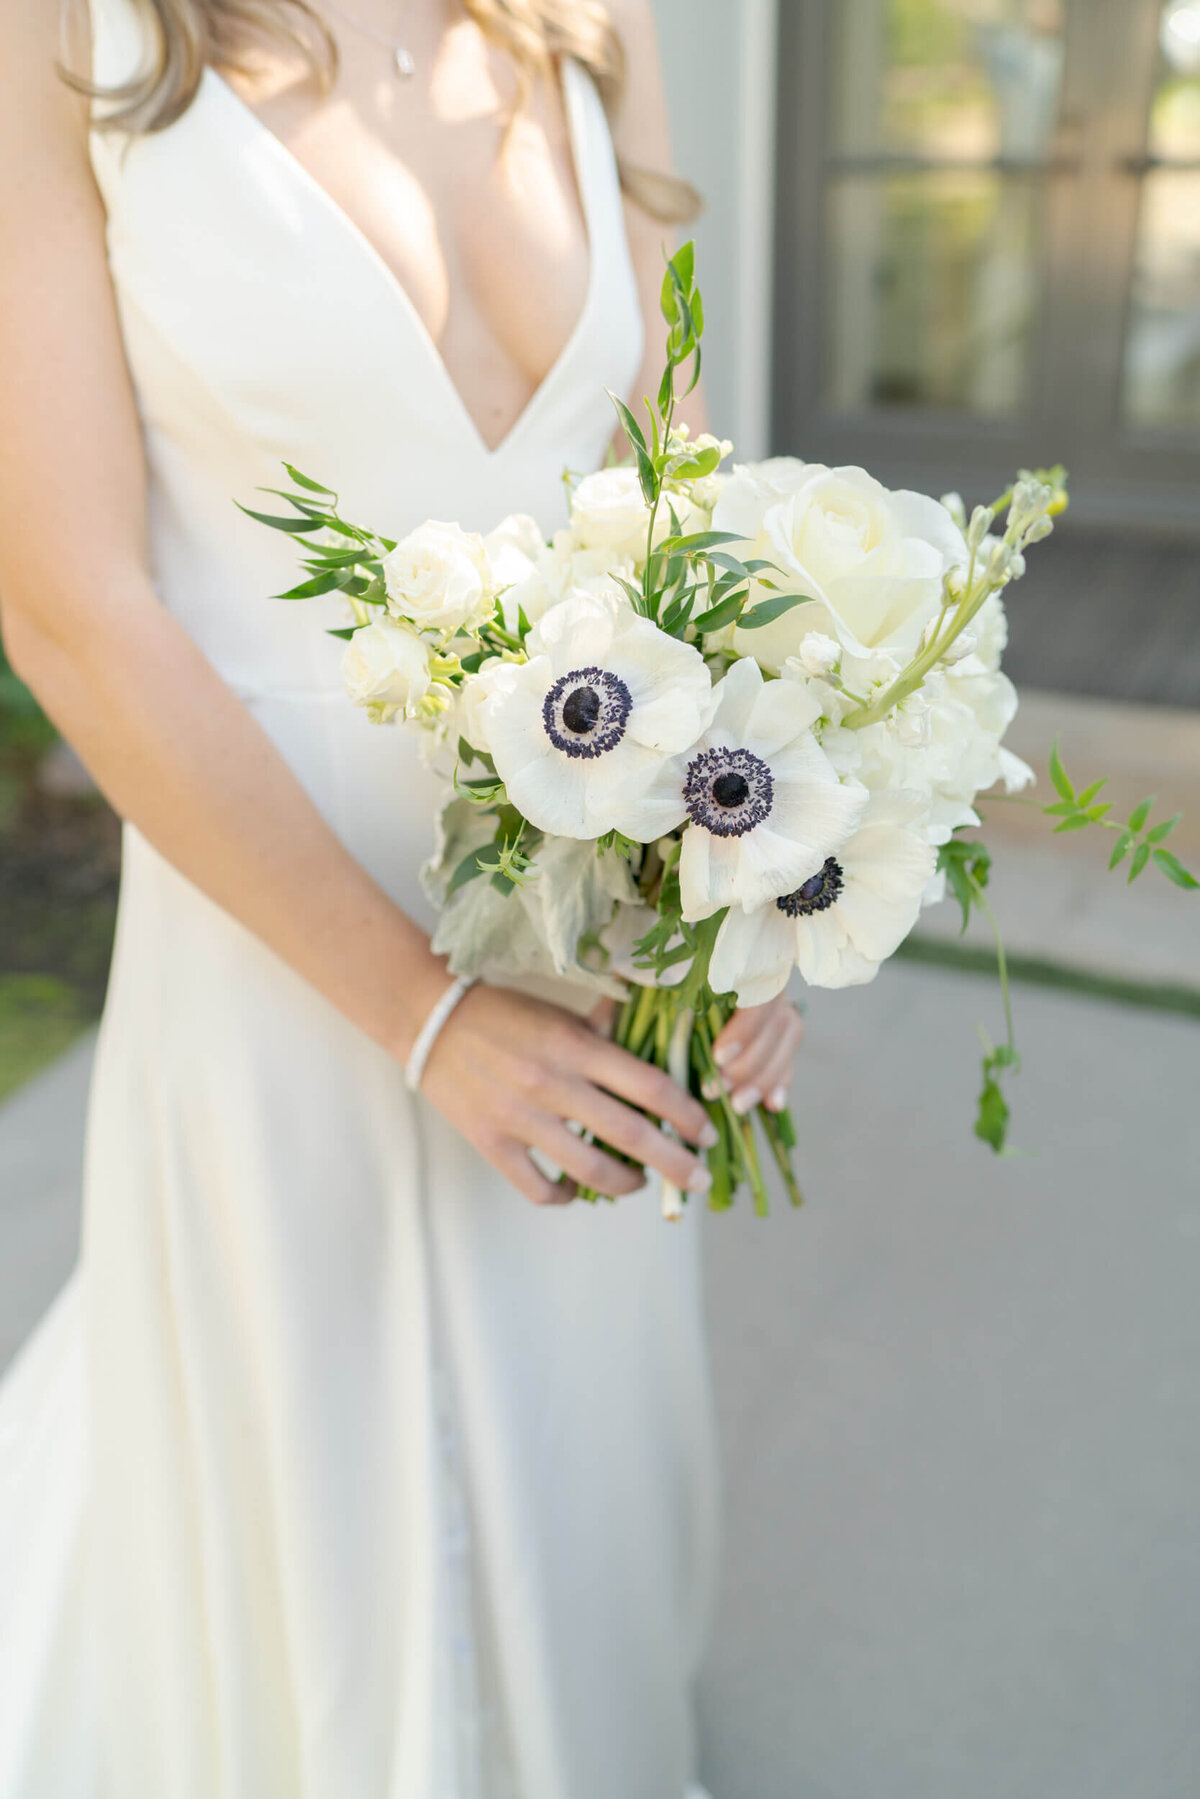 Bride in an elegant sleeveless  white wedding dress holding a bouquet of black-eyed anemones.